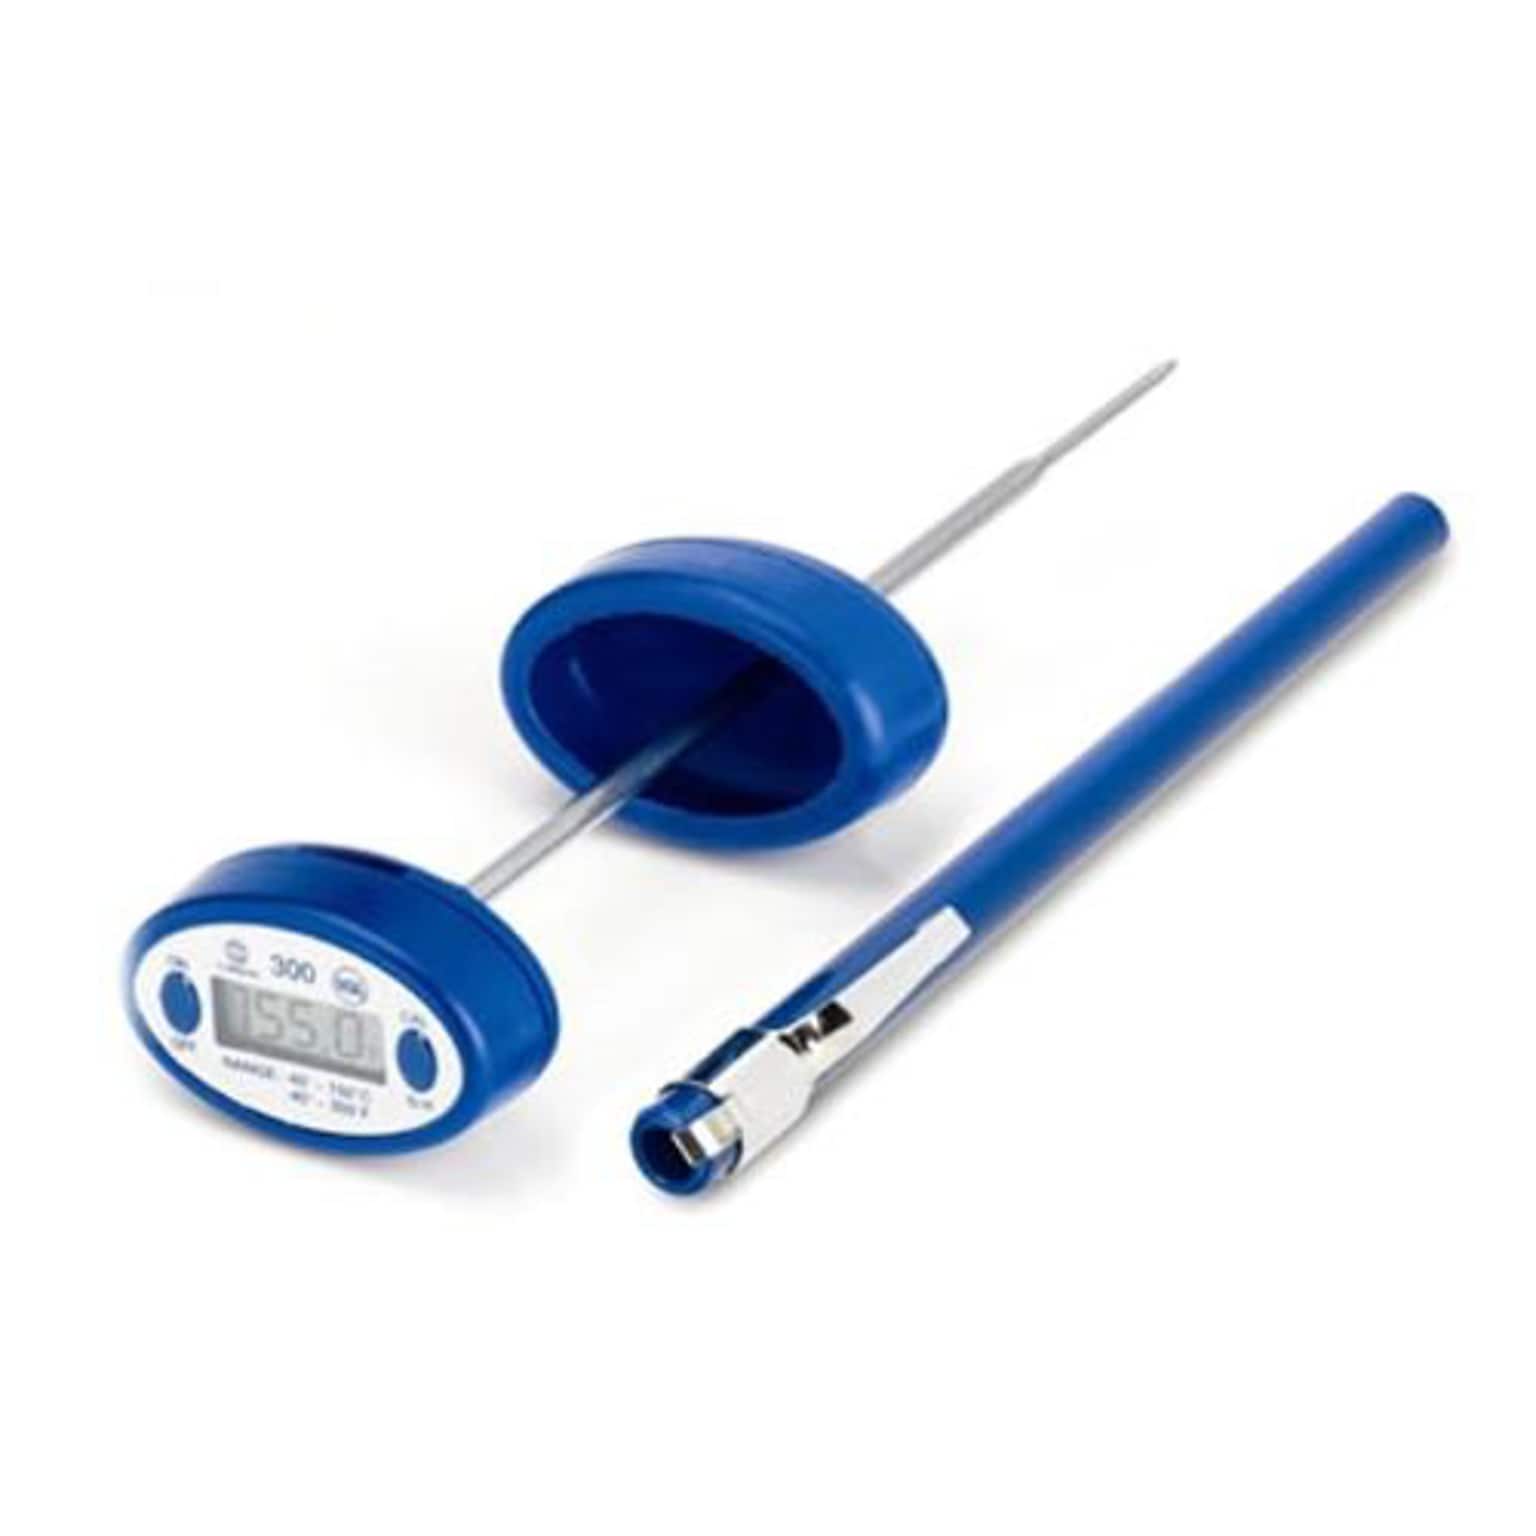 Comark Digital Pocket Test Thermometer, Multicolor, 4 L X 8 H X 1 W